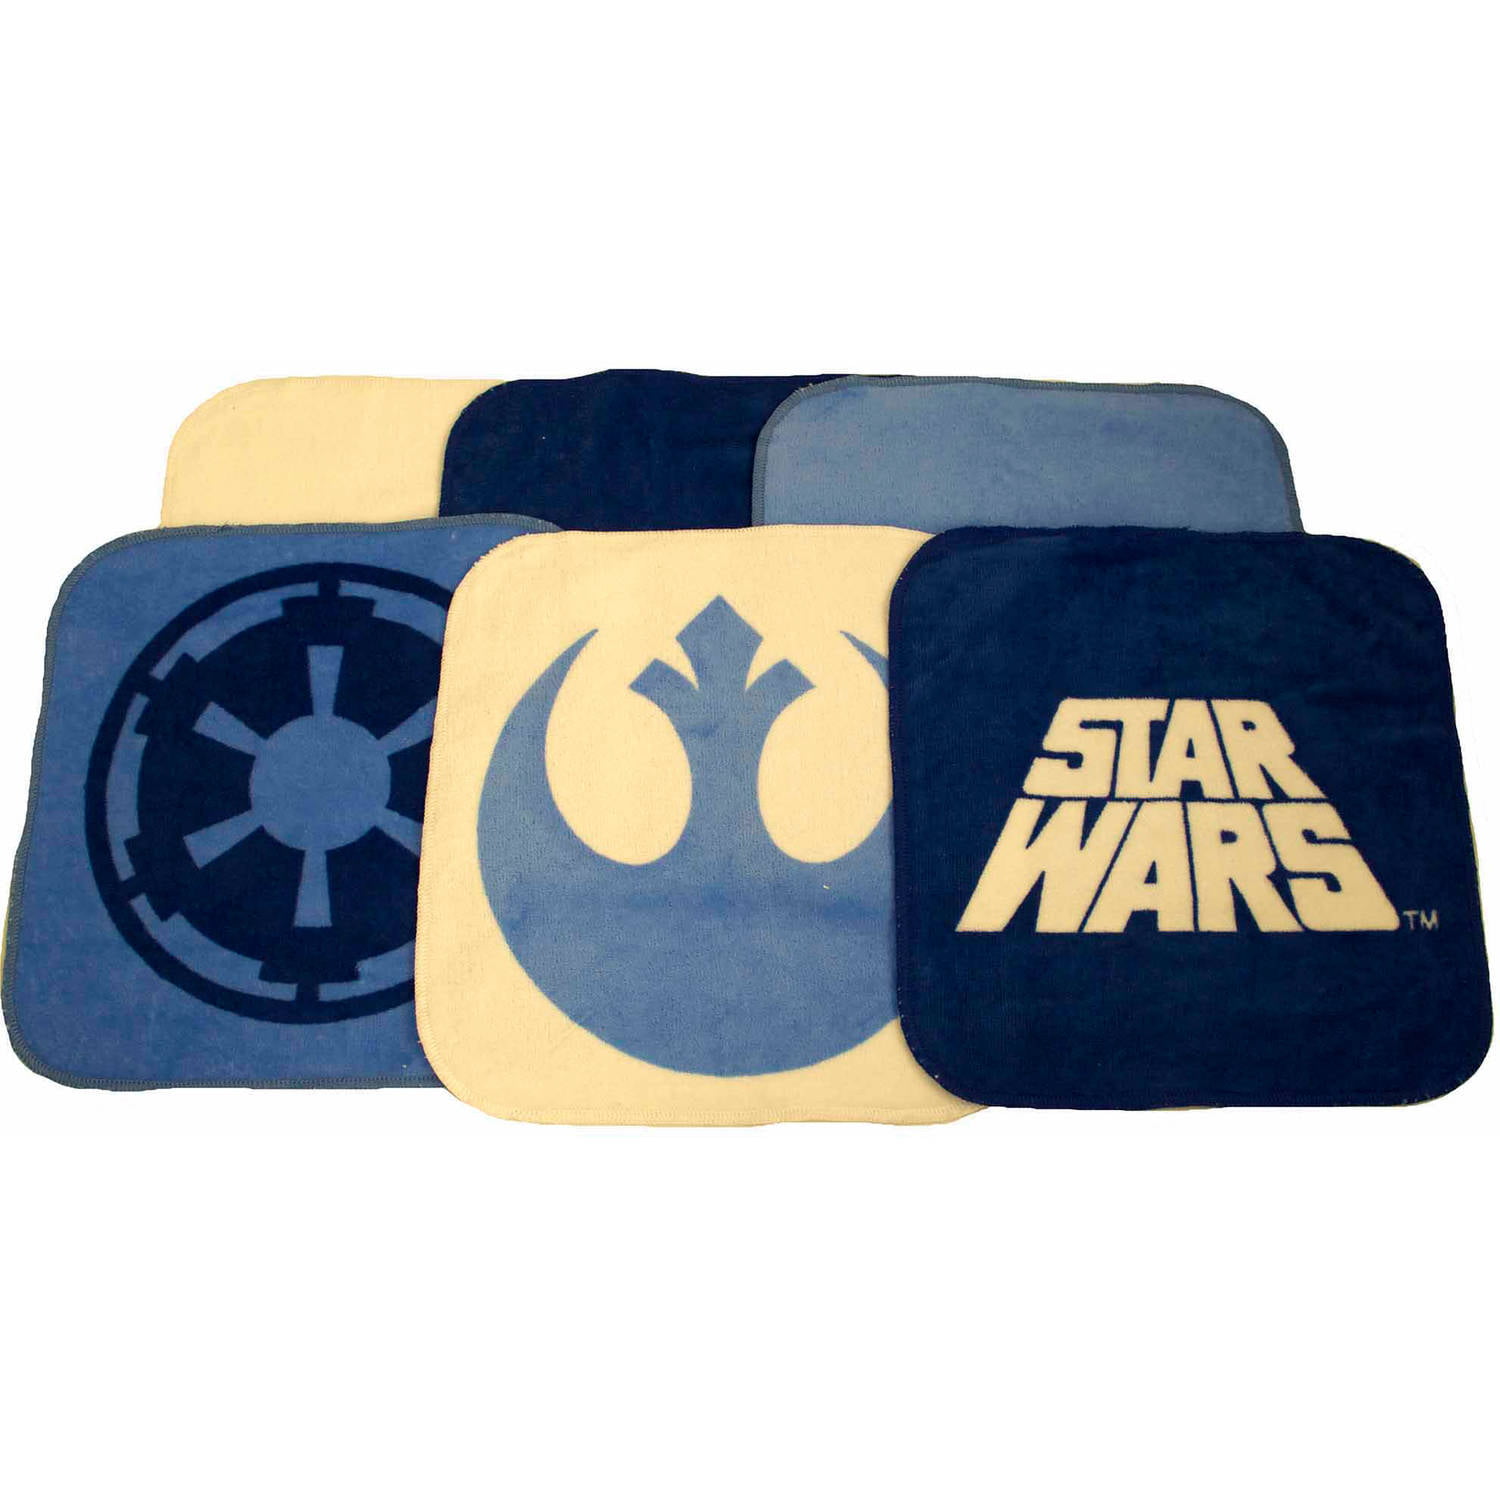 Star Wars AT Walker Sketch Kitchen Towels Hand Towels 2 piece set